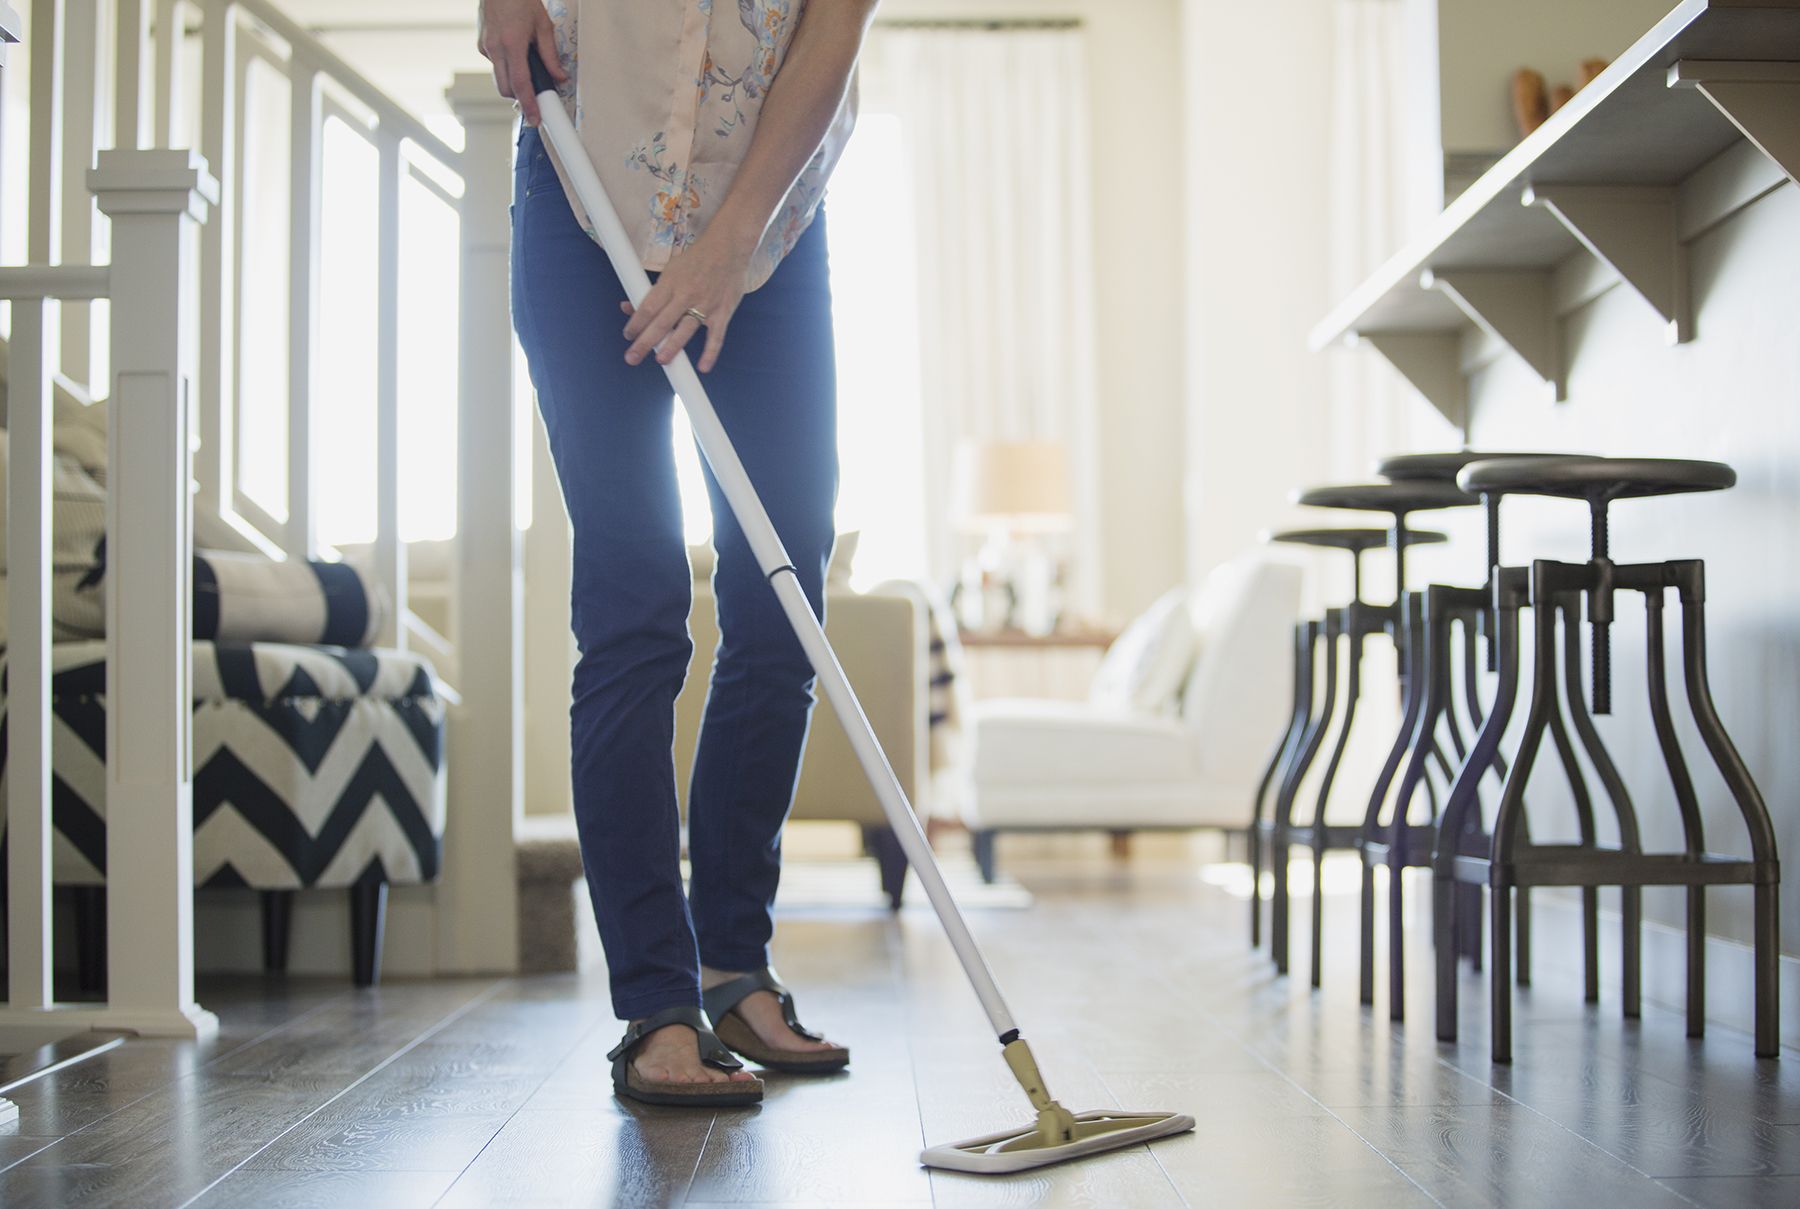 Kvinde støv-mopping gulv